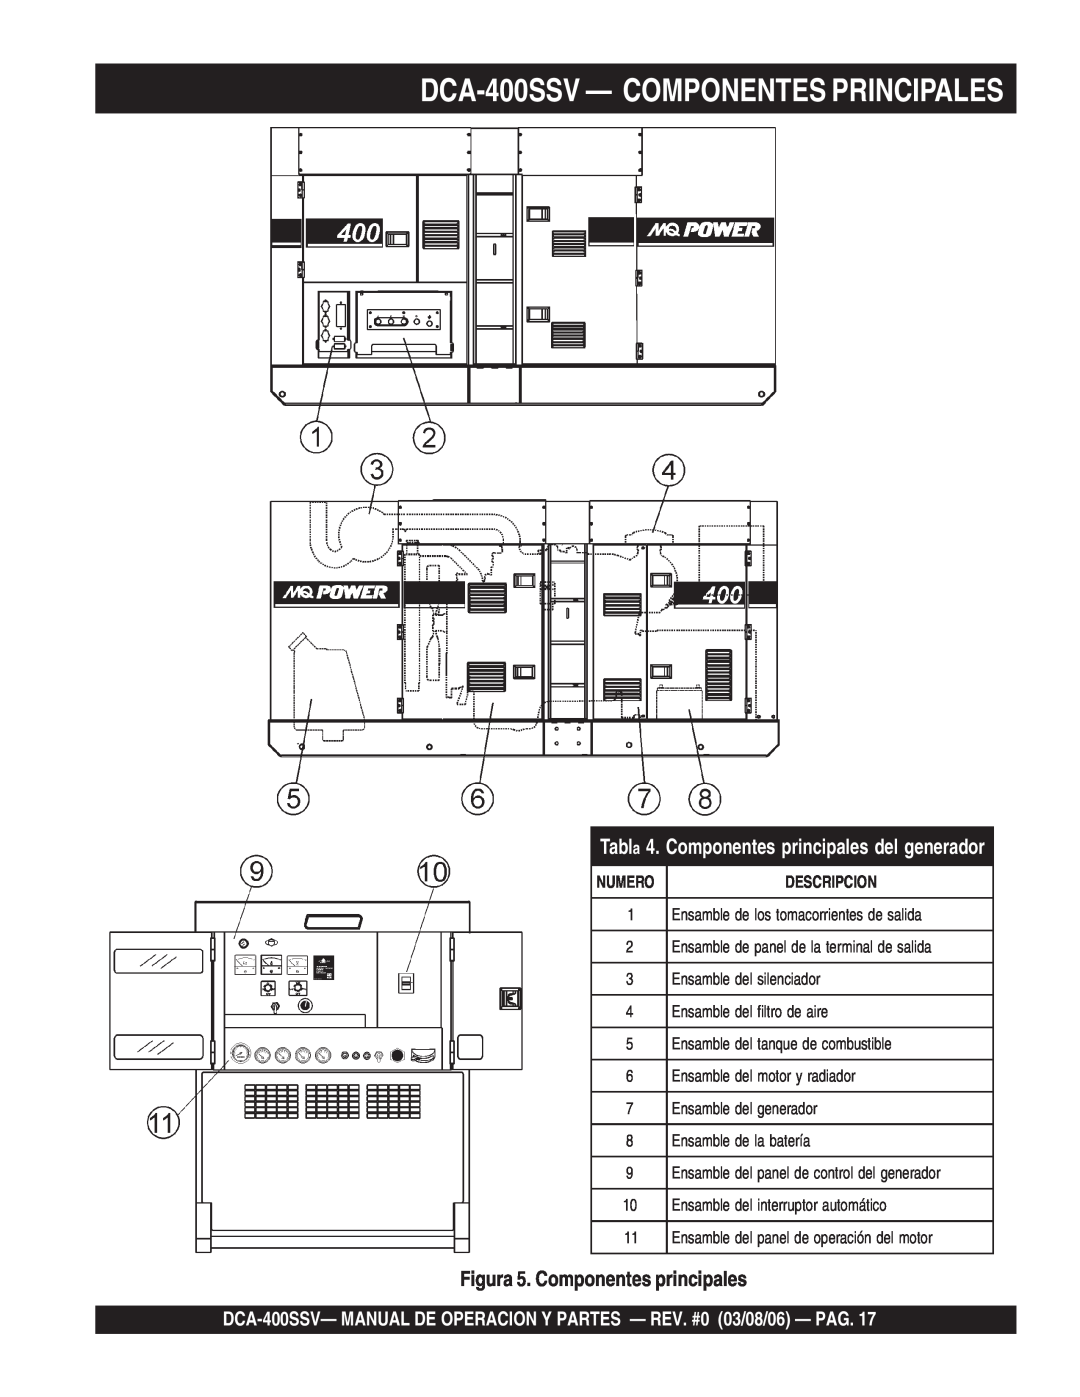 Multiquip operation manual DCA-400SSV— COMPONENTES PRINCIPALES, Figura 5. Componentes principales, Descripcion 